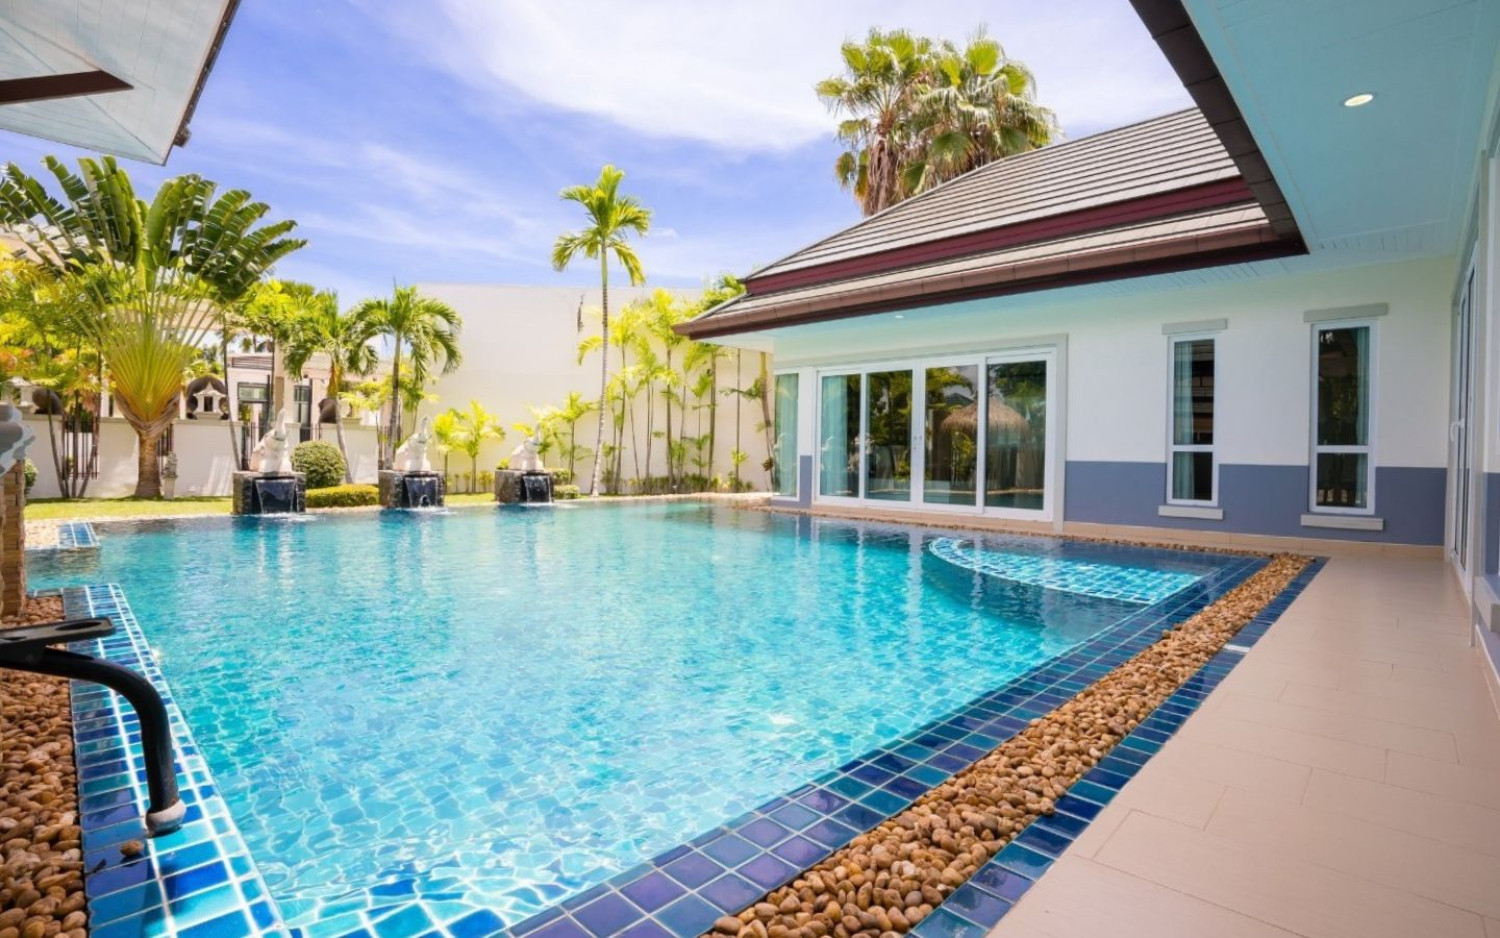 Luxury Pool Villa For Sale - 3 Bed 2 Bath image 3